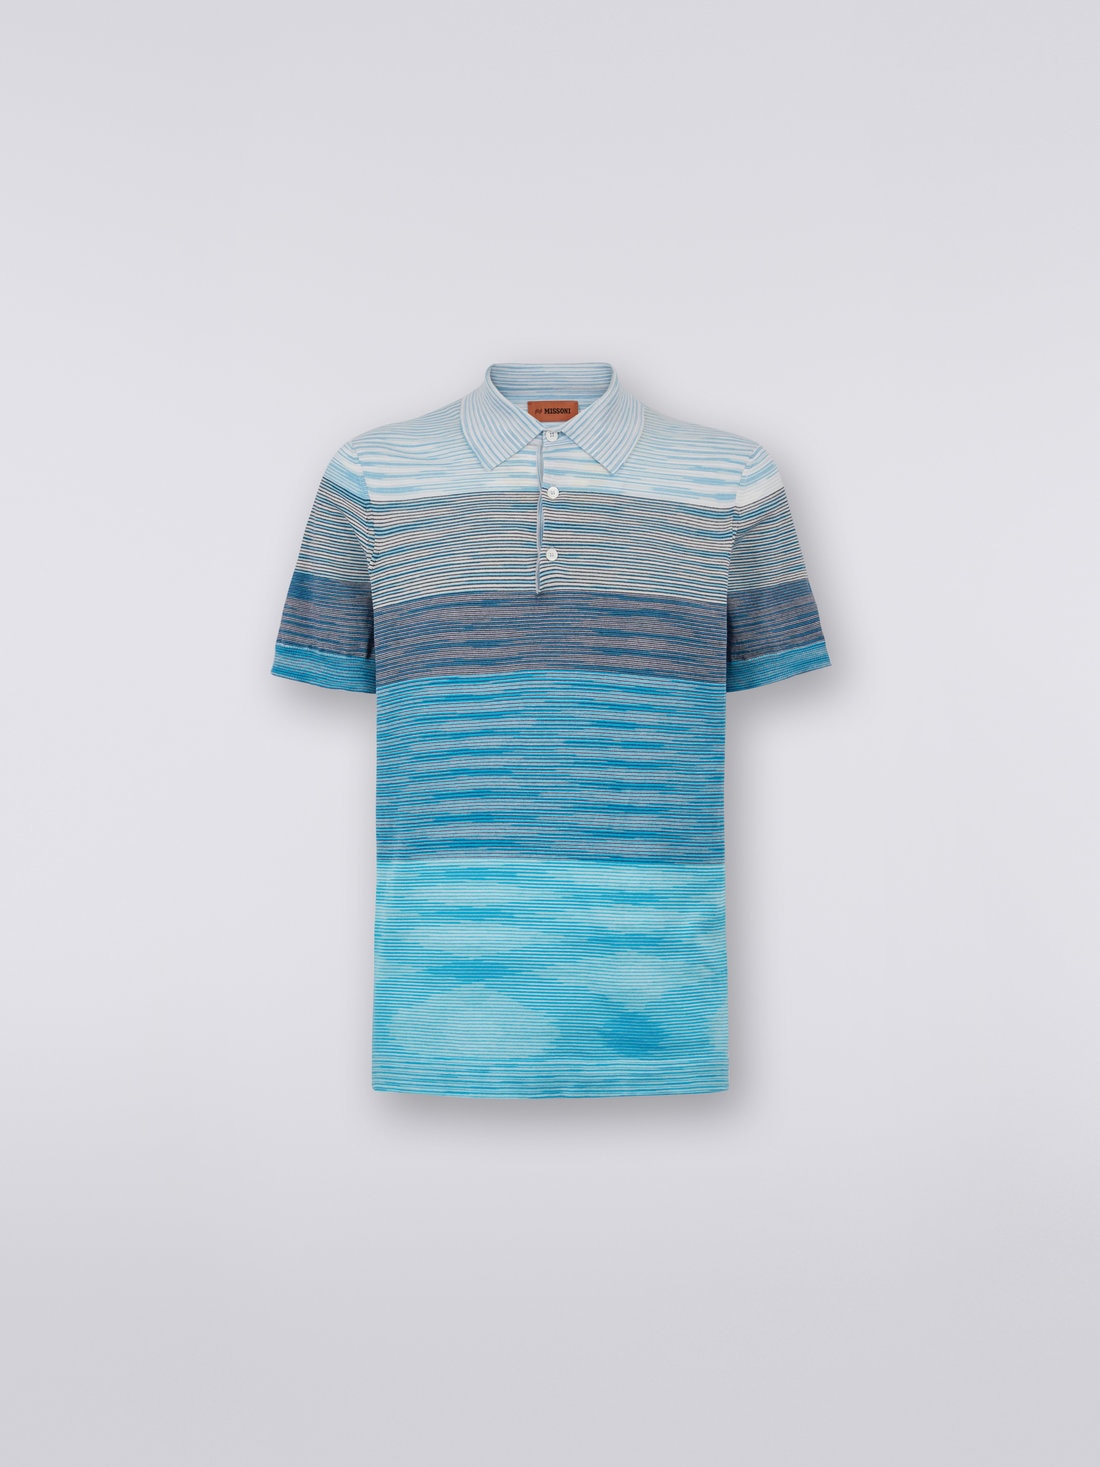 Kurzärmeliges Poloshirt aus gestreifter Baumwolle mit Dégradé-Effekt, Weiß & Hellblau - US23S20PBK012QS7294 - 0